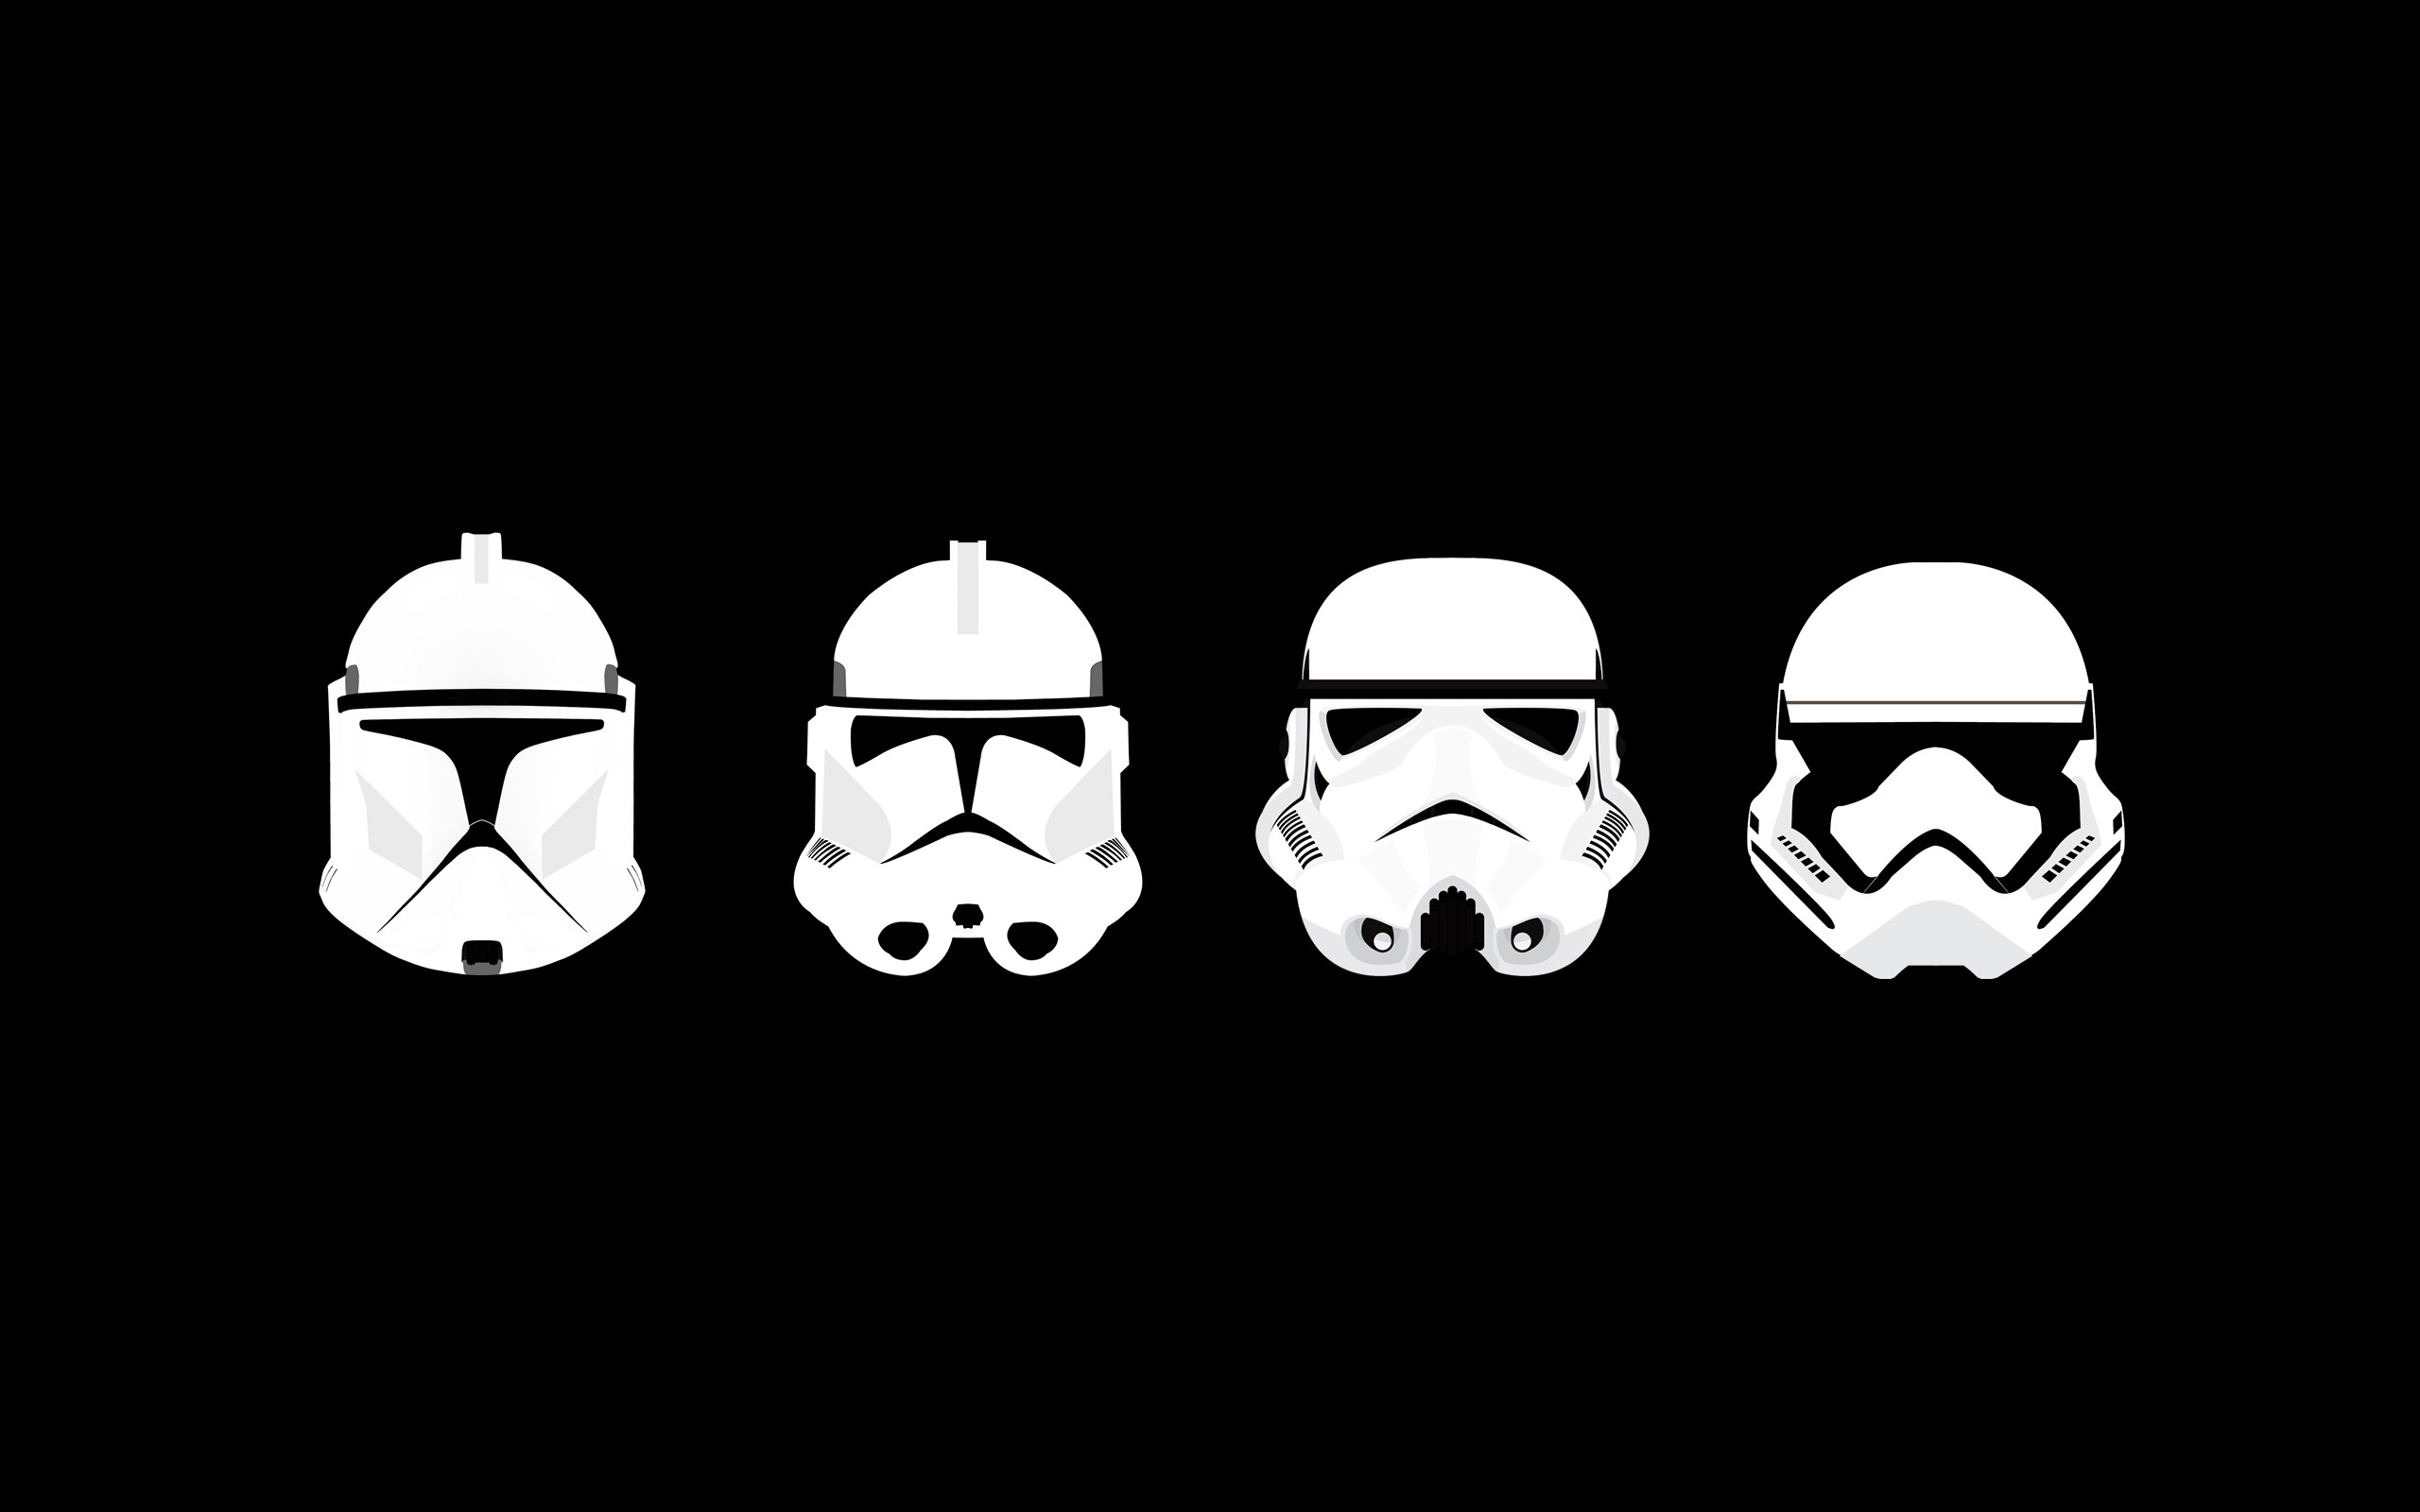 stormtrooper wallpaper hd,helmet,headgear,black and white,facial hair,fictional character